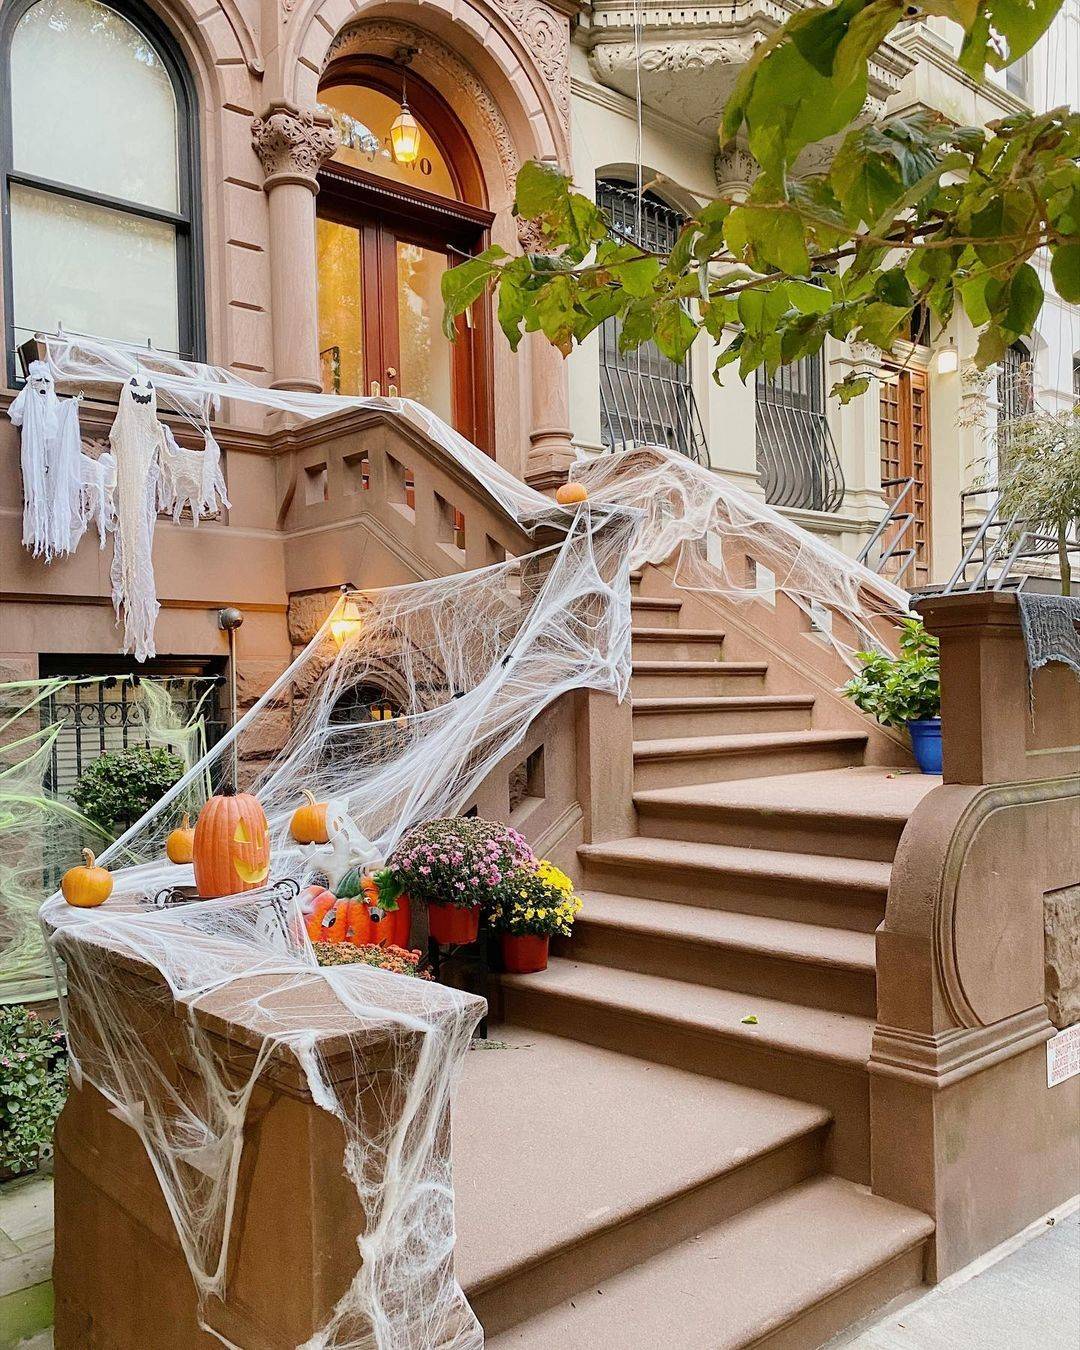 Subtle Halloween Decorations for Spooky Seasons